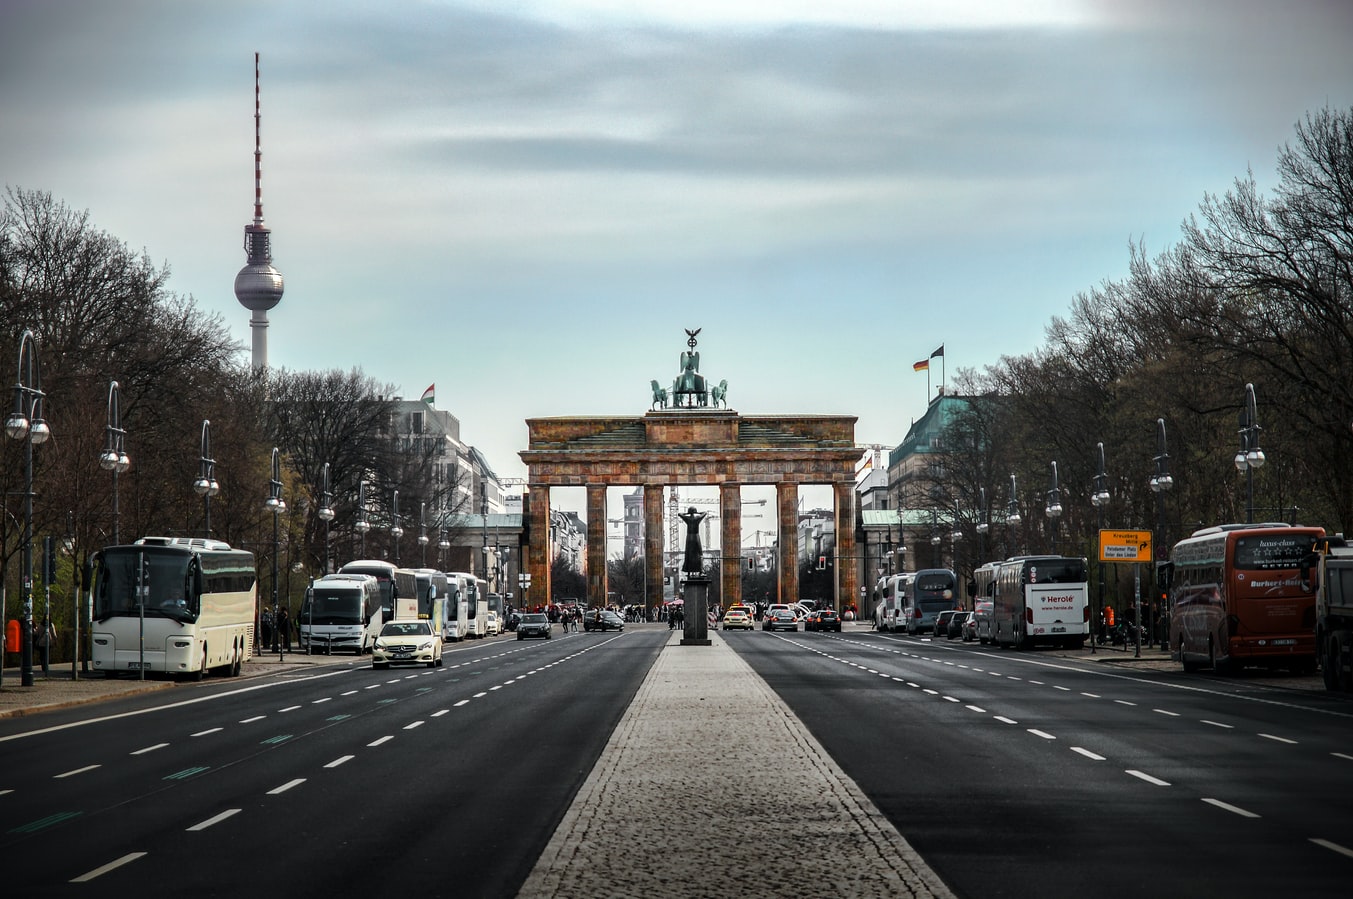 Germany suffers sharpest economic decline since reunification